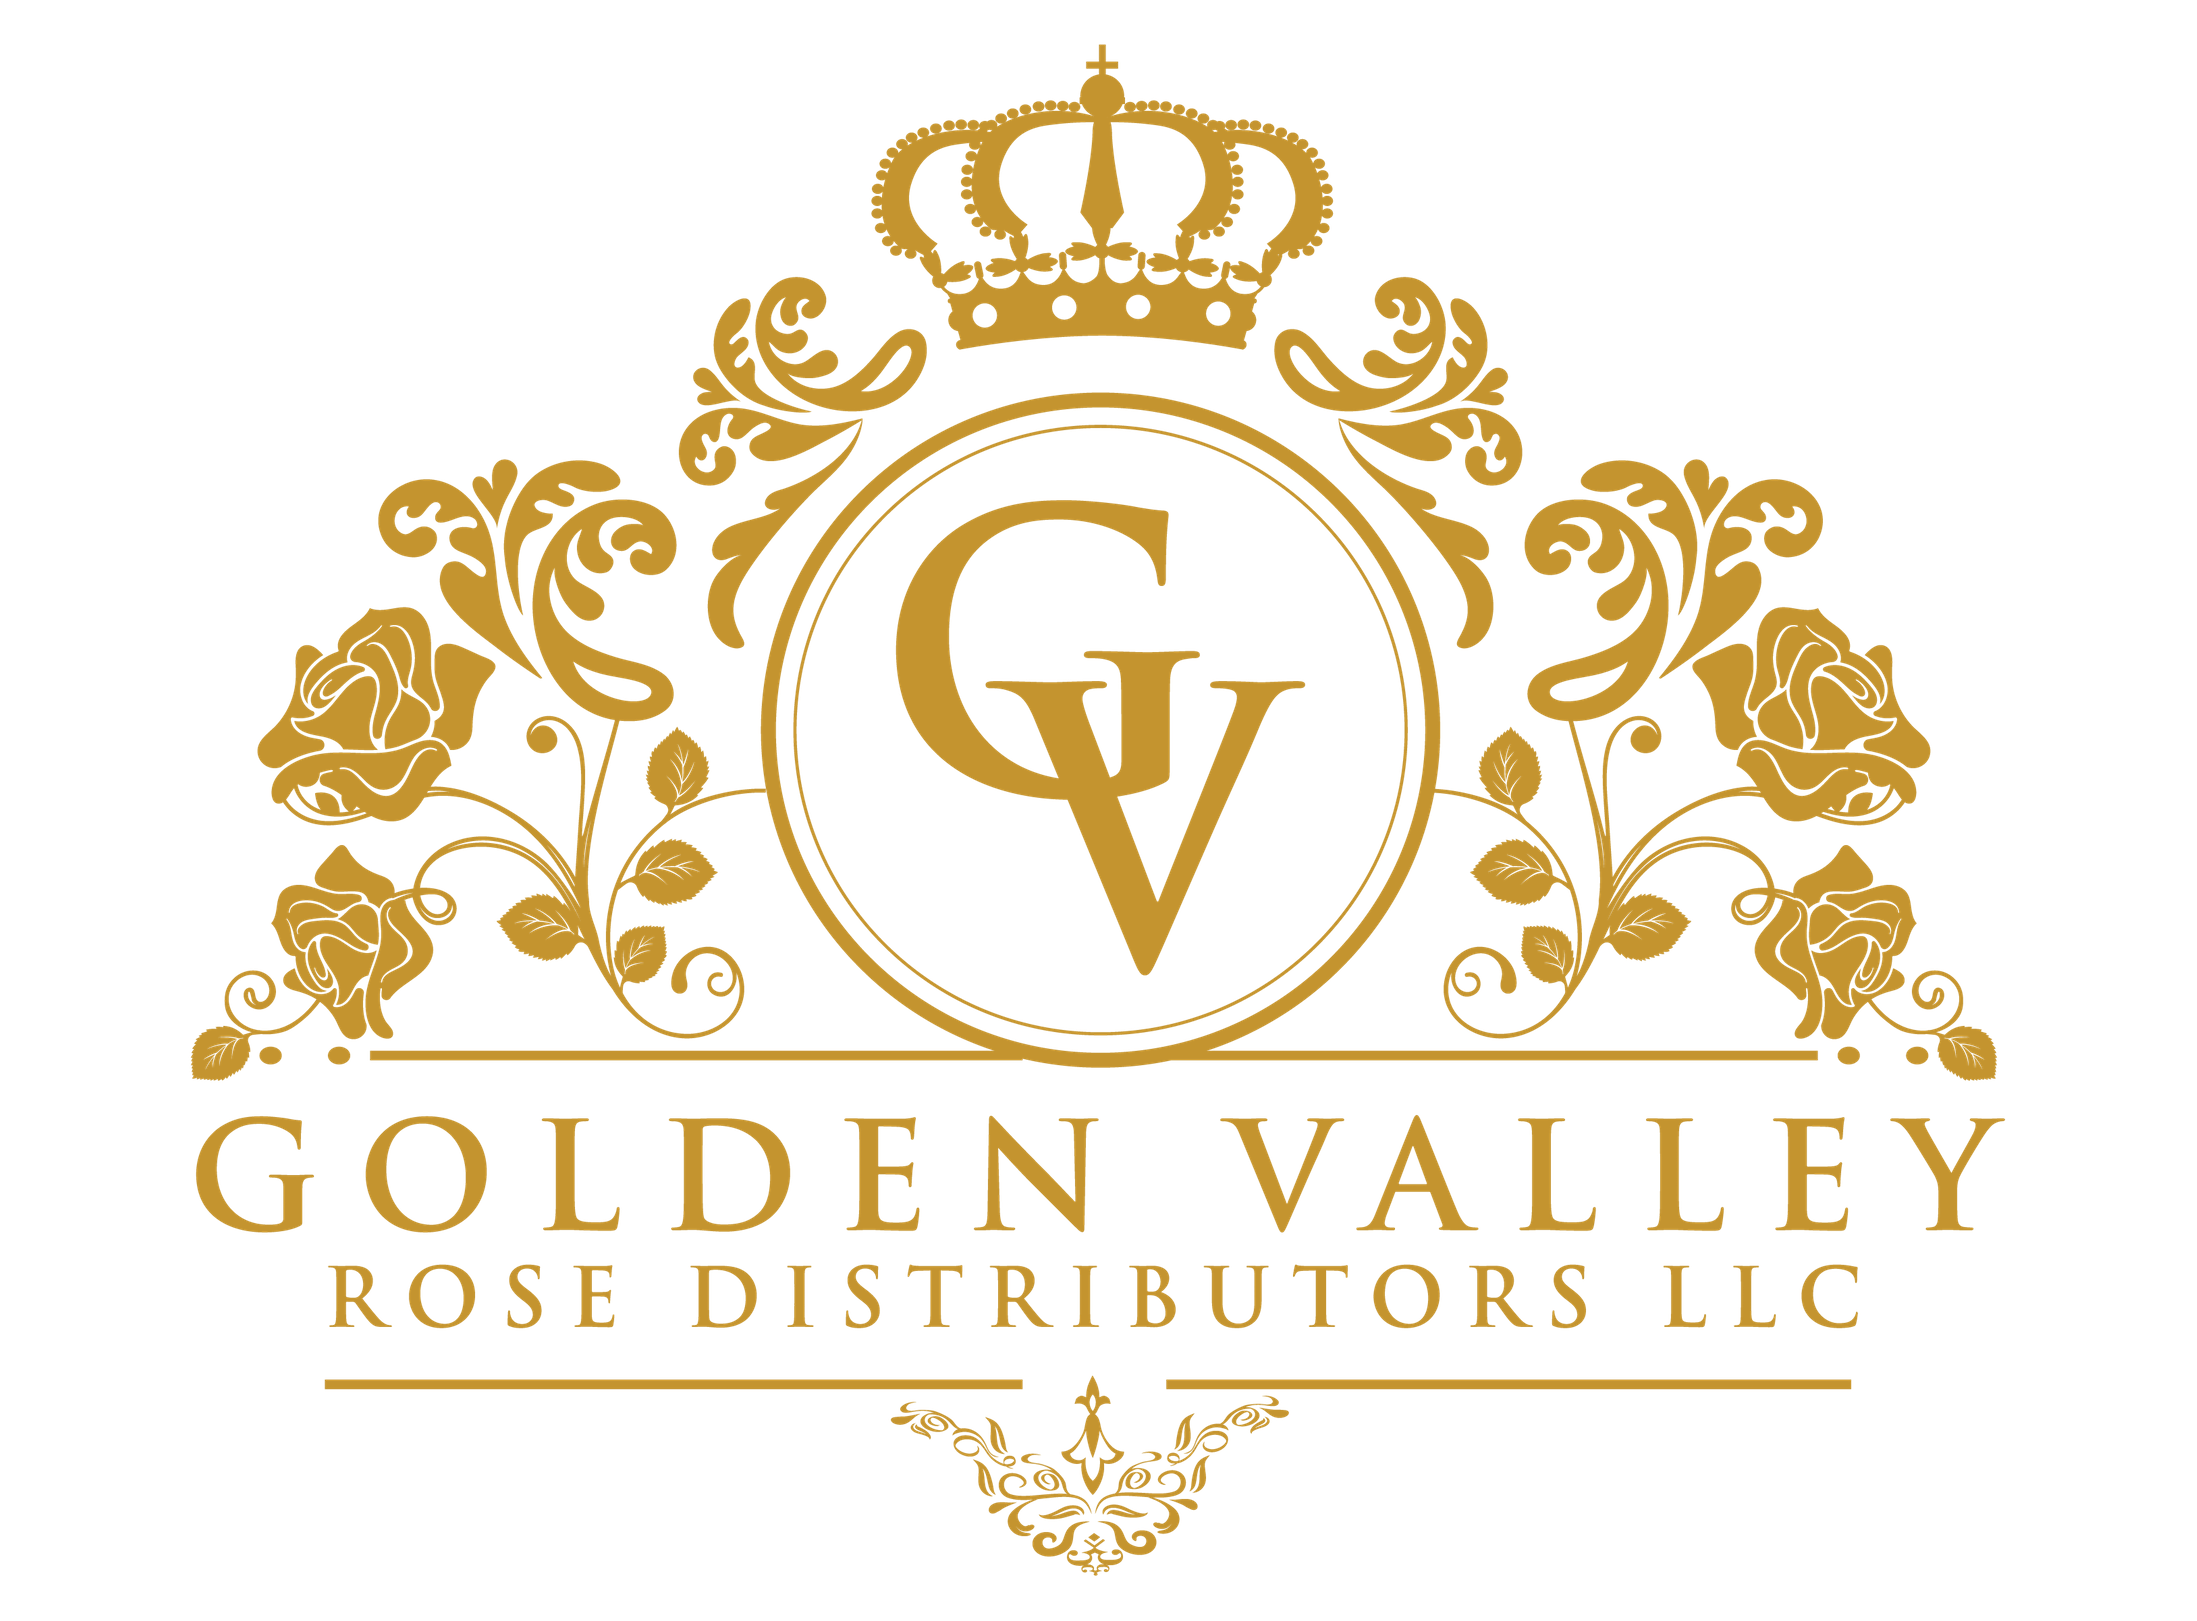 Golden Valley Rose Distributors LLC